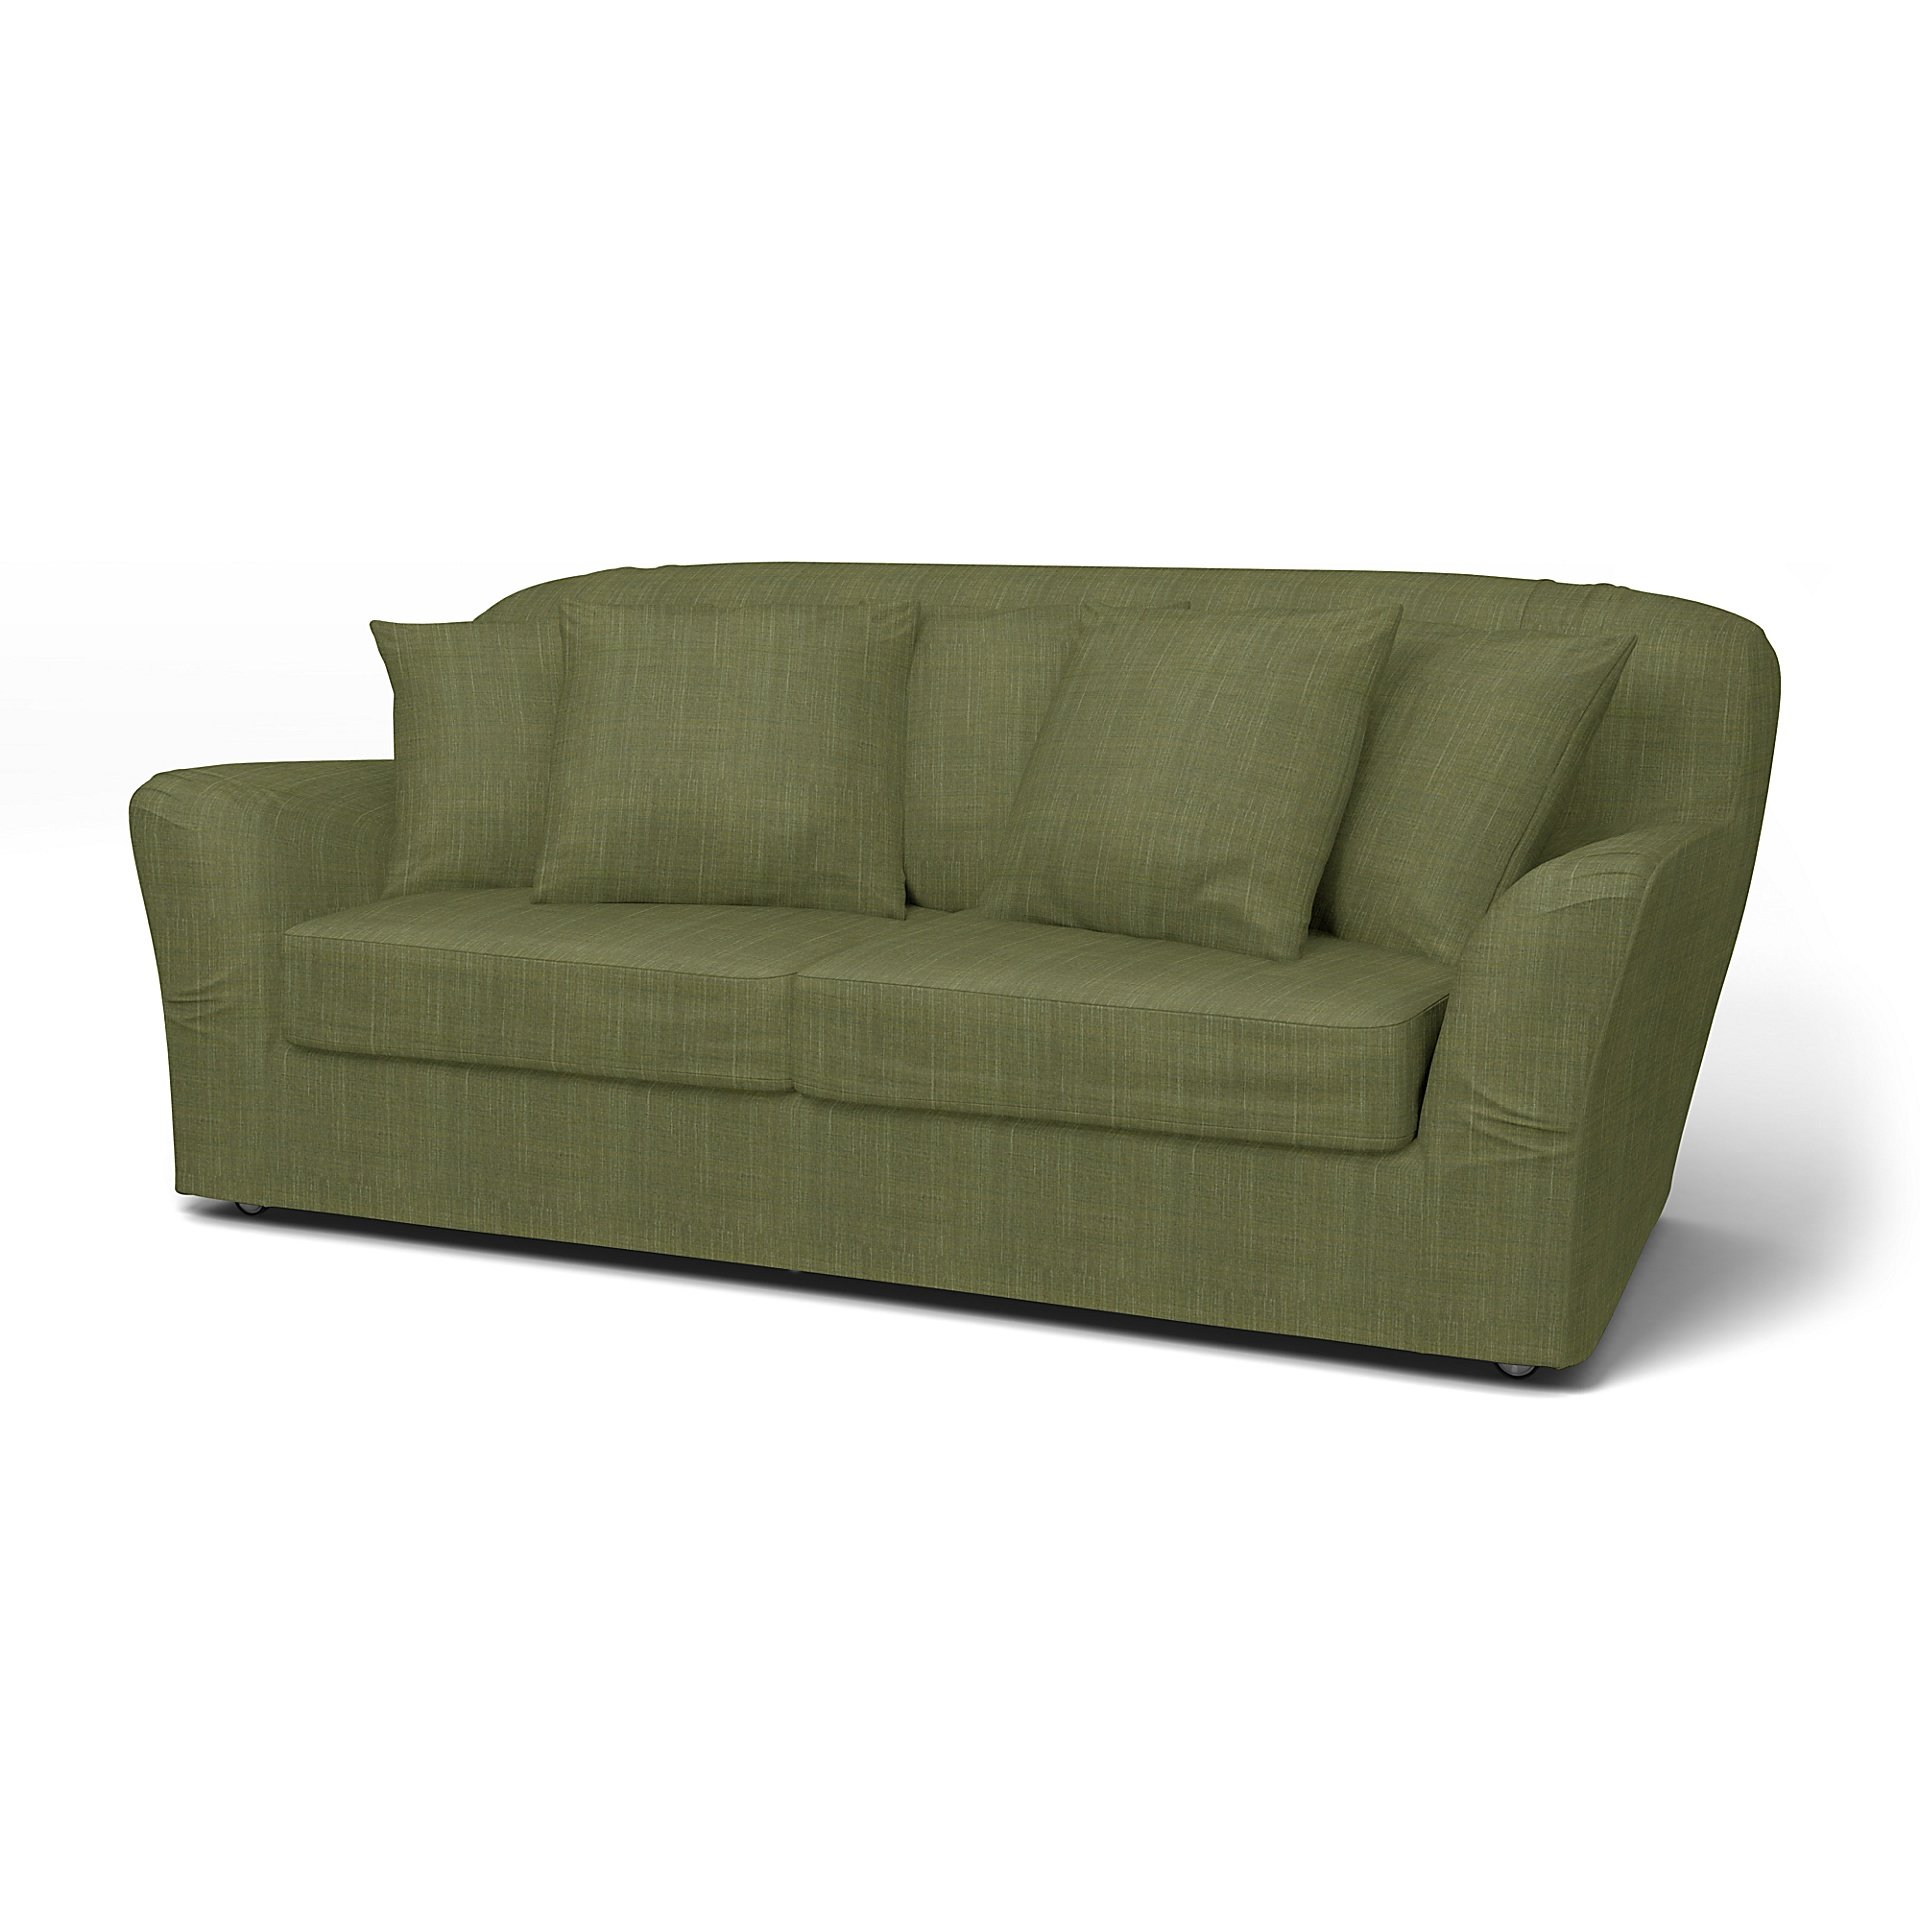 IKEA - Tomelilla Sofa Bed Cover (Small model), Moss Green, Boucle & Texture - Bemz